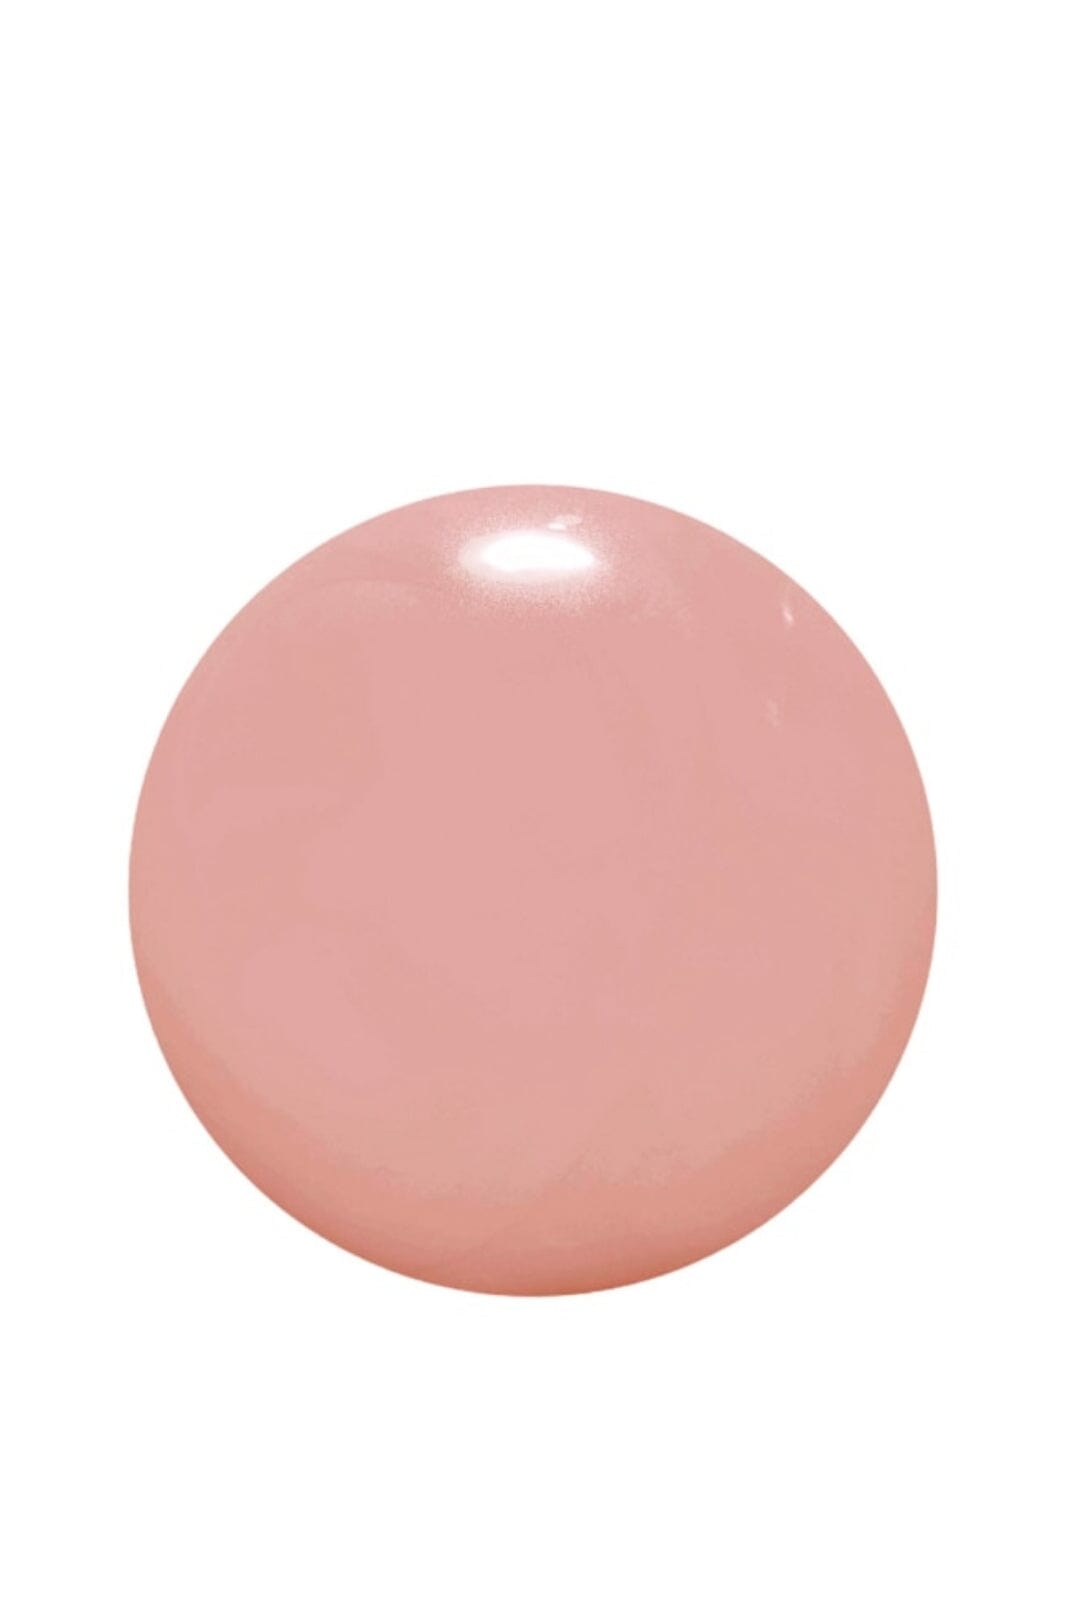 Nailberry - Flapper - Oxygenated Dusty Pink Neglelak 